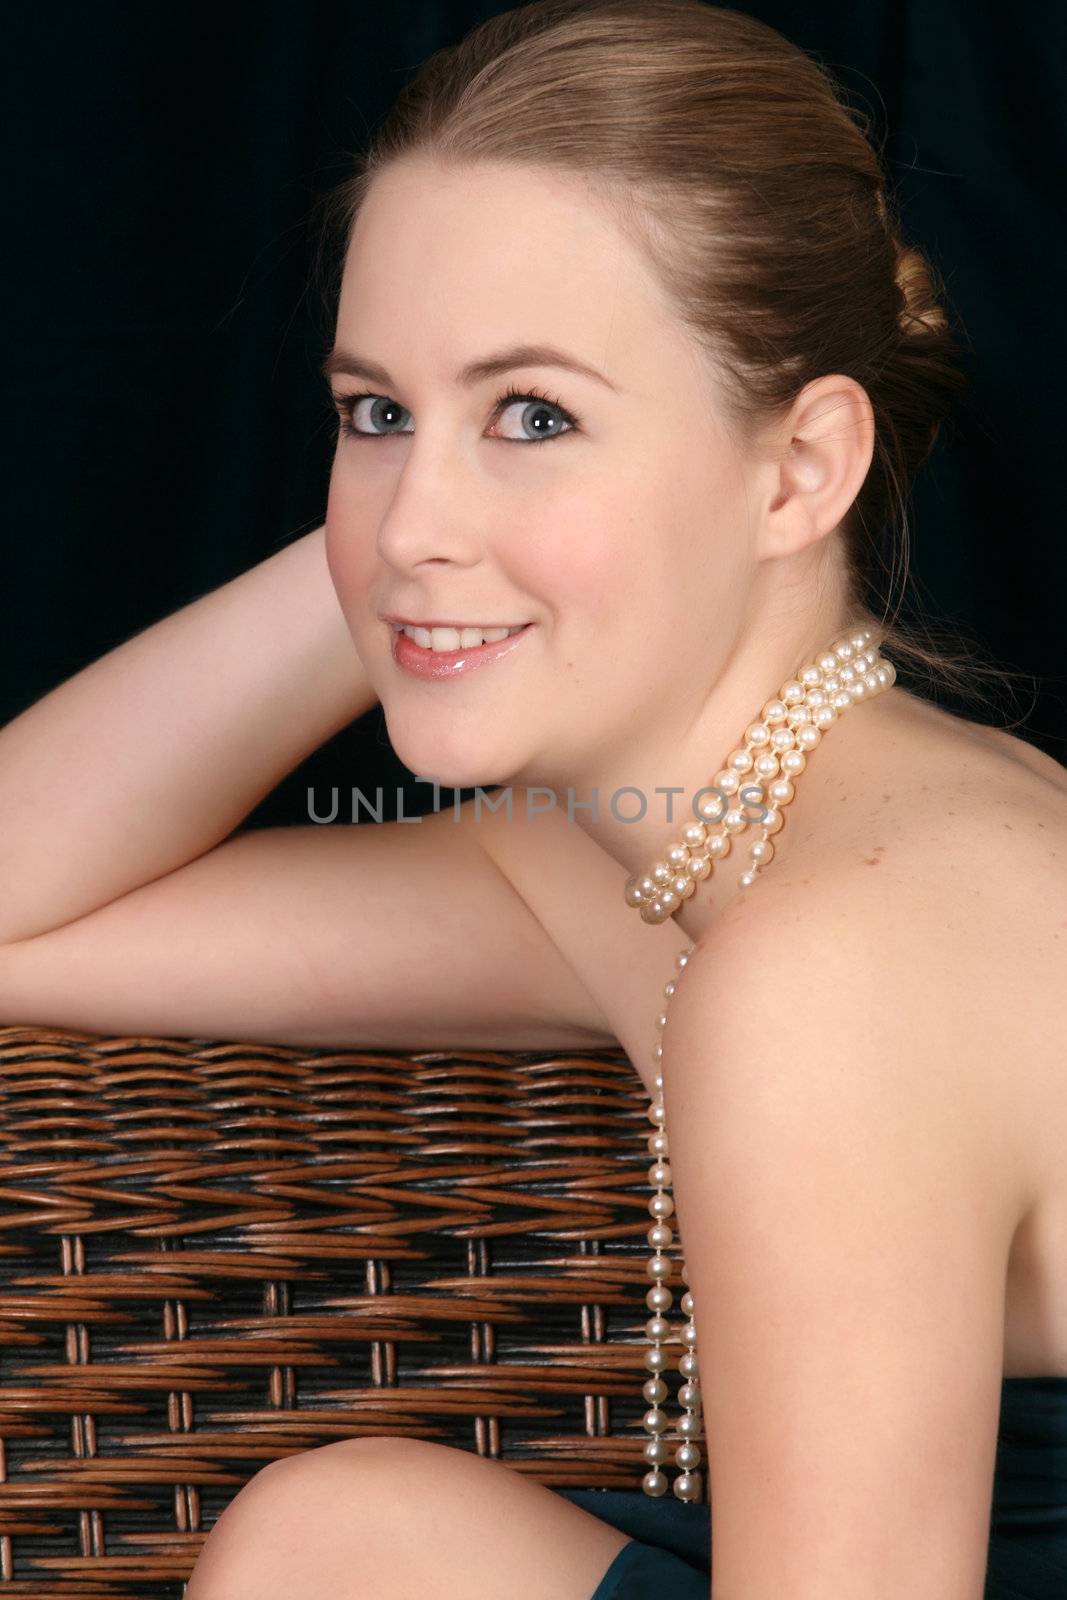 Beautiful blond female wearing pearls against a dark background